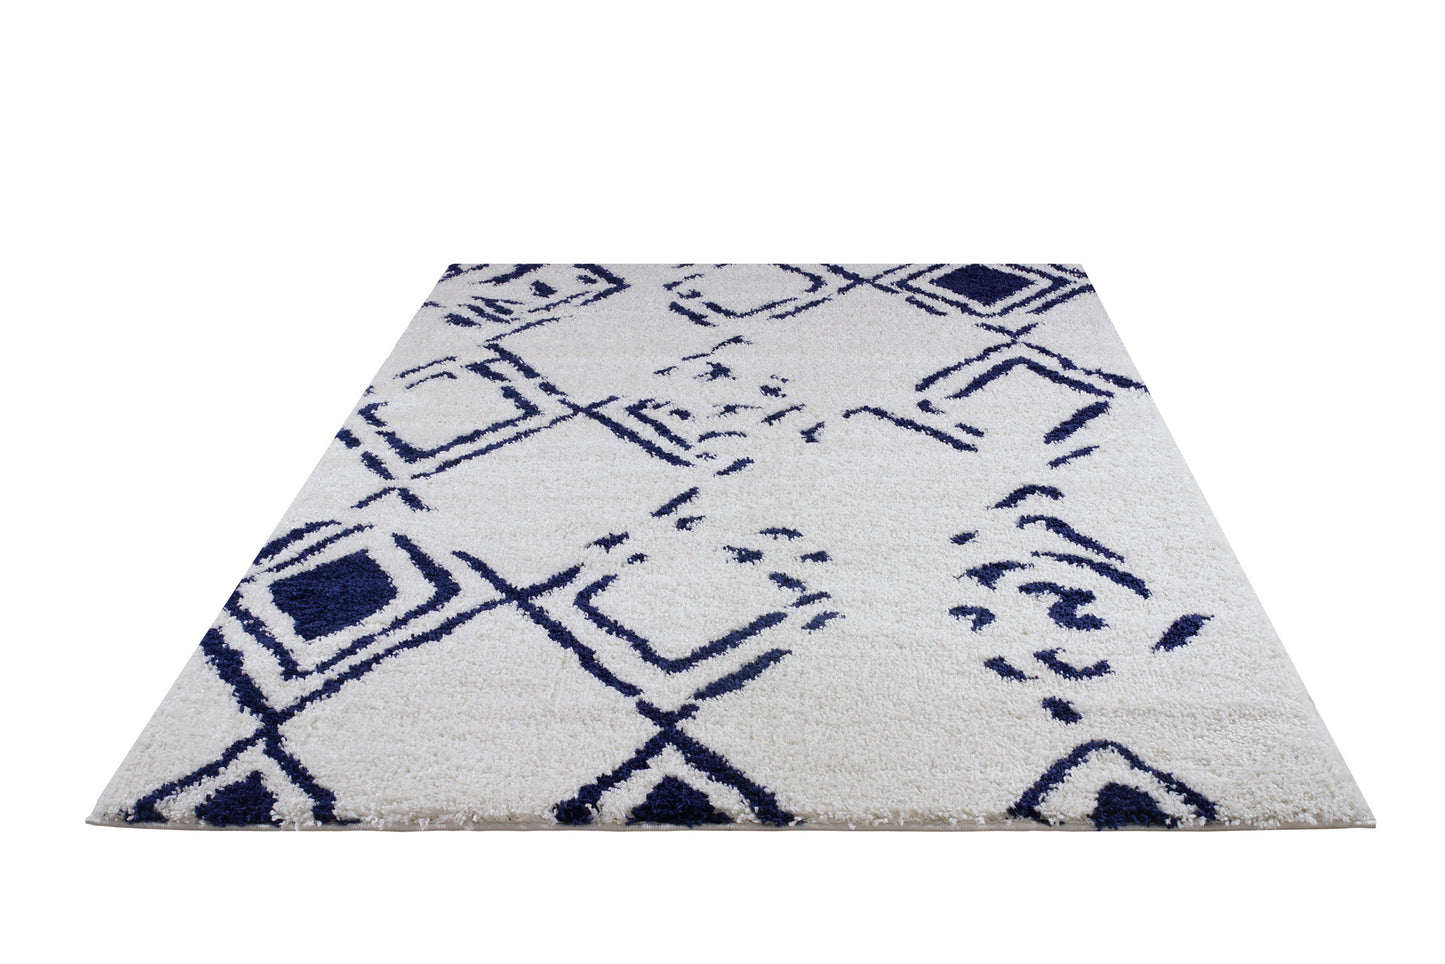 ladole rugs shaggy kenitra european abstract soft polypropylene modern small mat doormat rug in white dark blue 110 x 211 57cm x 90cm 2x8, 3x10, 2x10 ft Long Runner Rug, Hallway, Balcony, Entry Way, Kitchen, Stairs